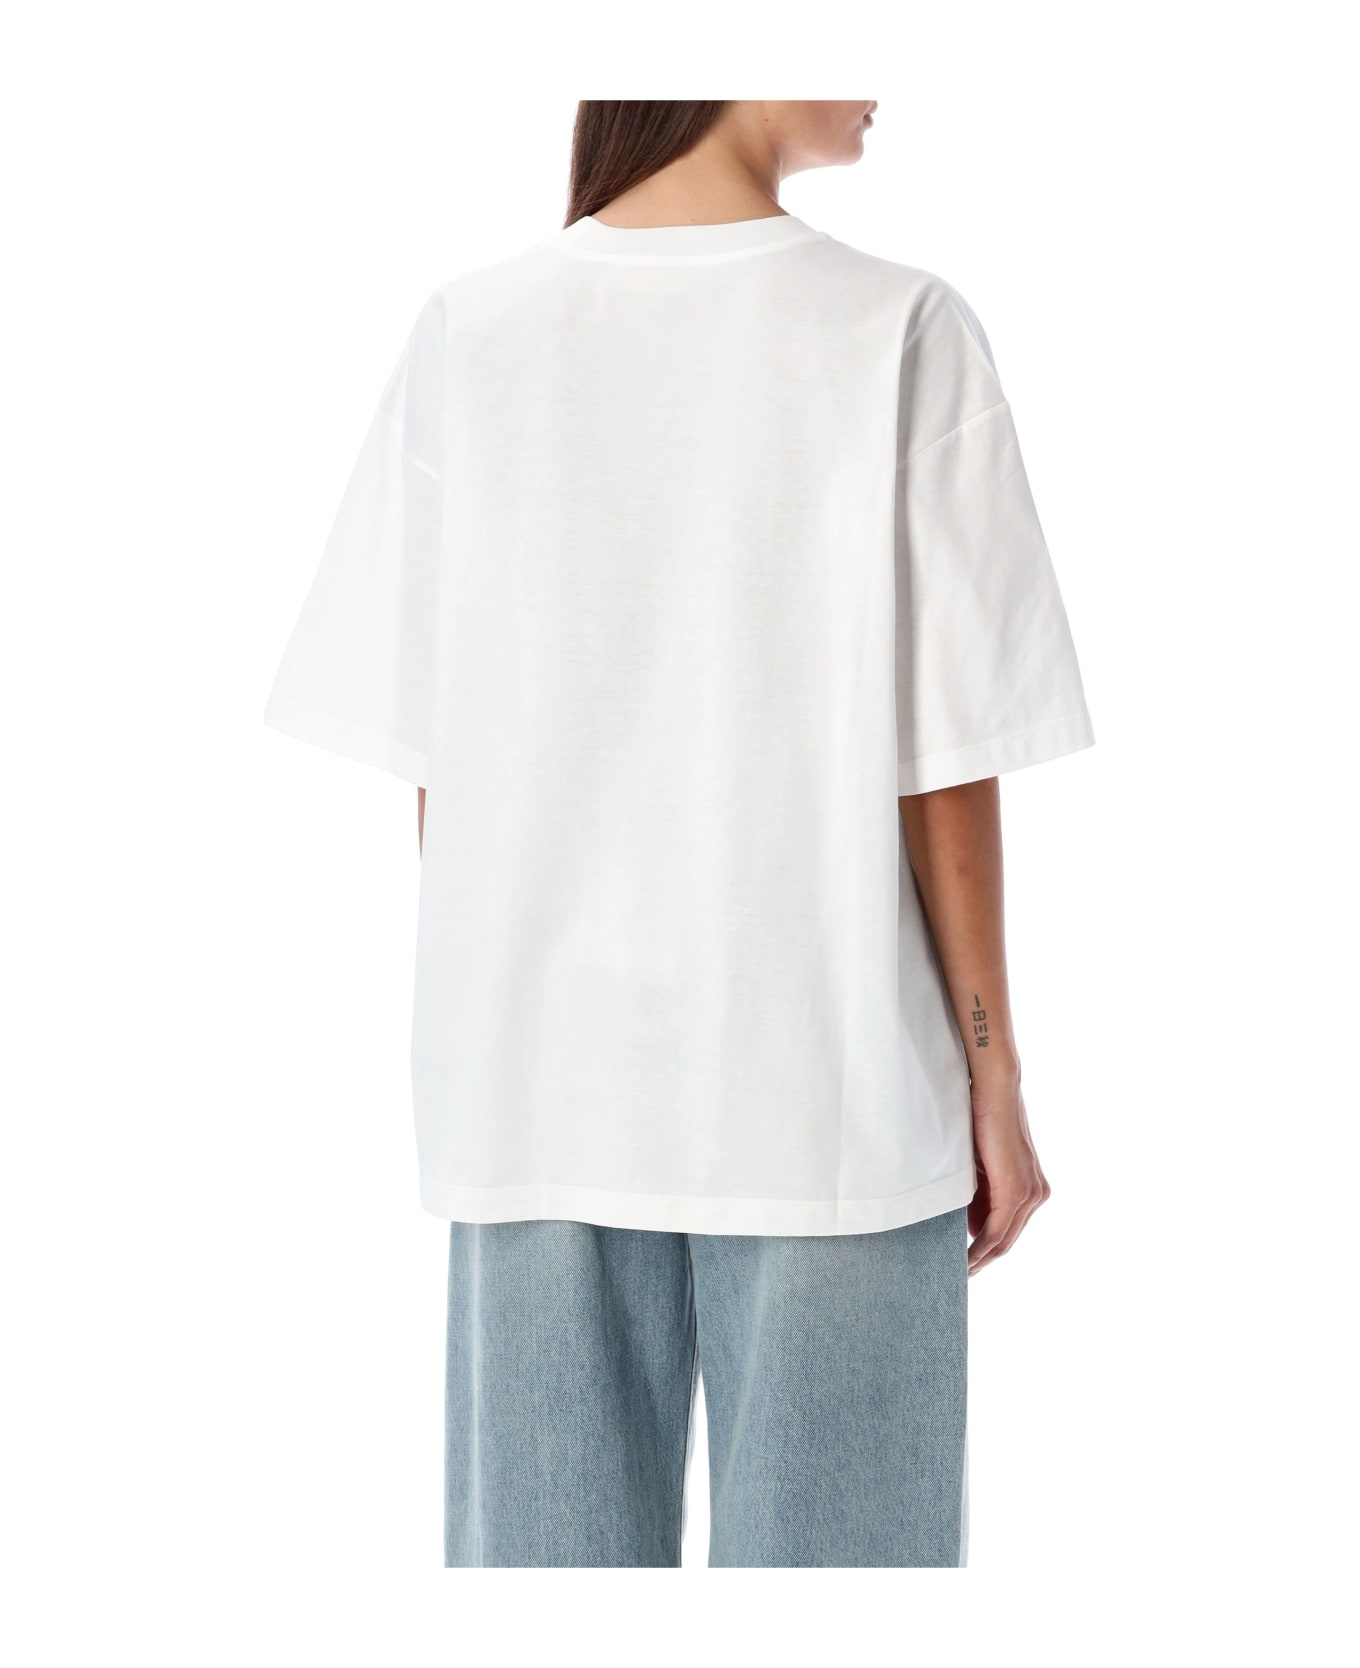 Marni Heart T-shirt - White トップス